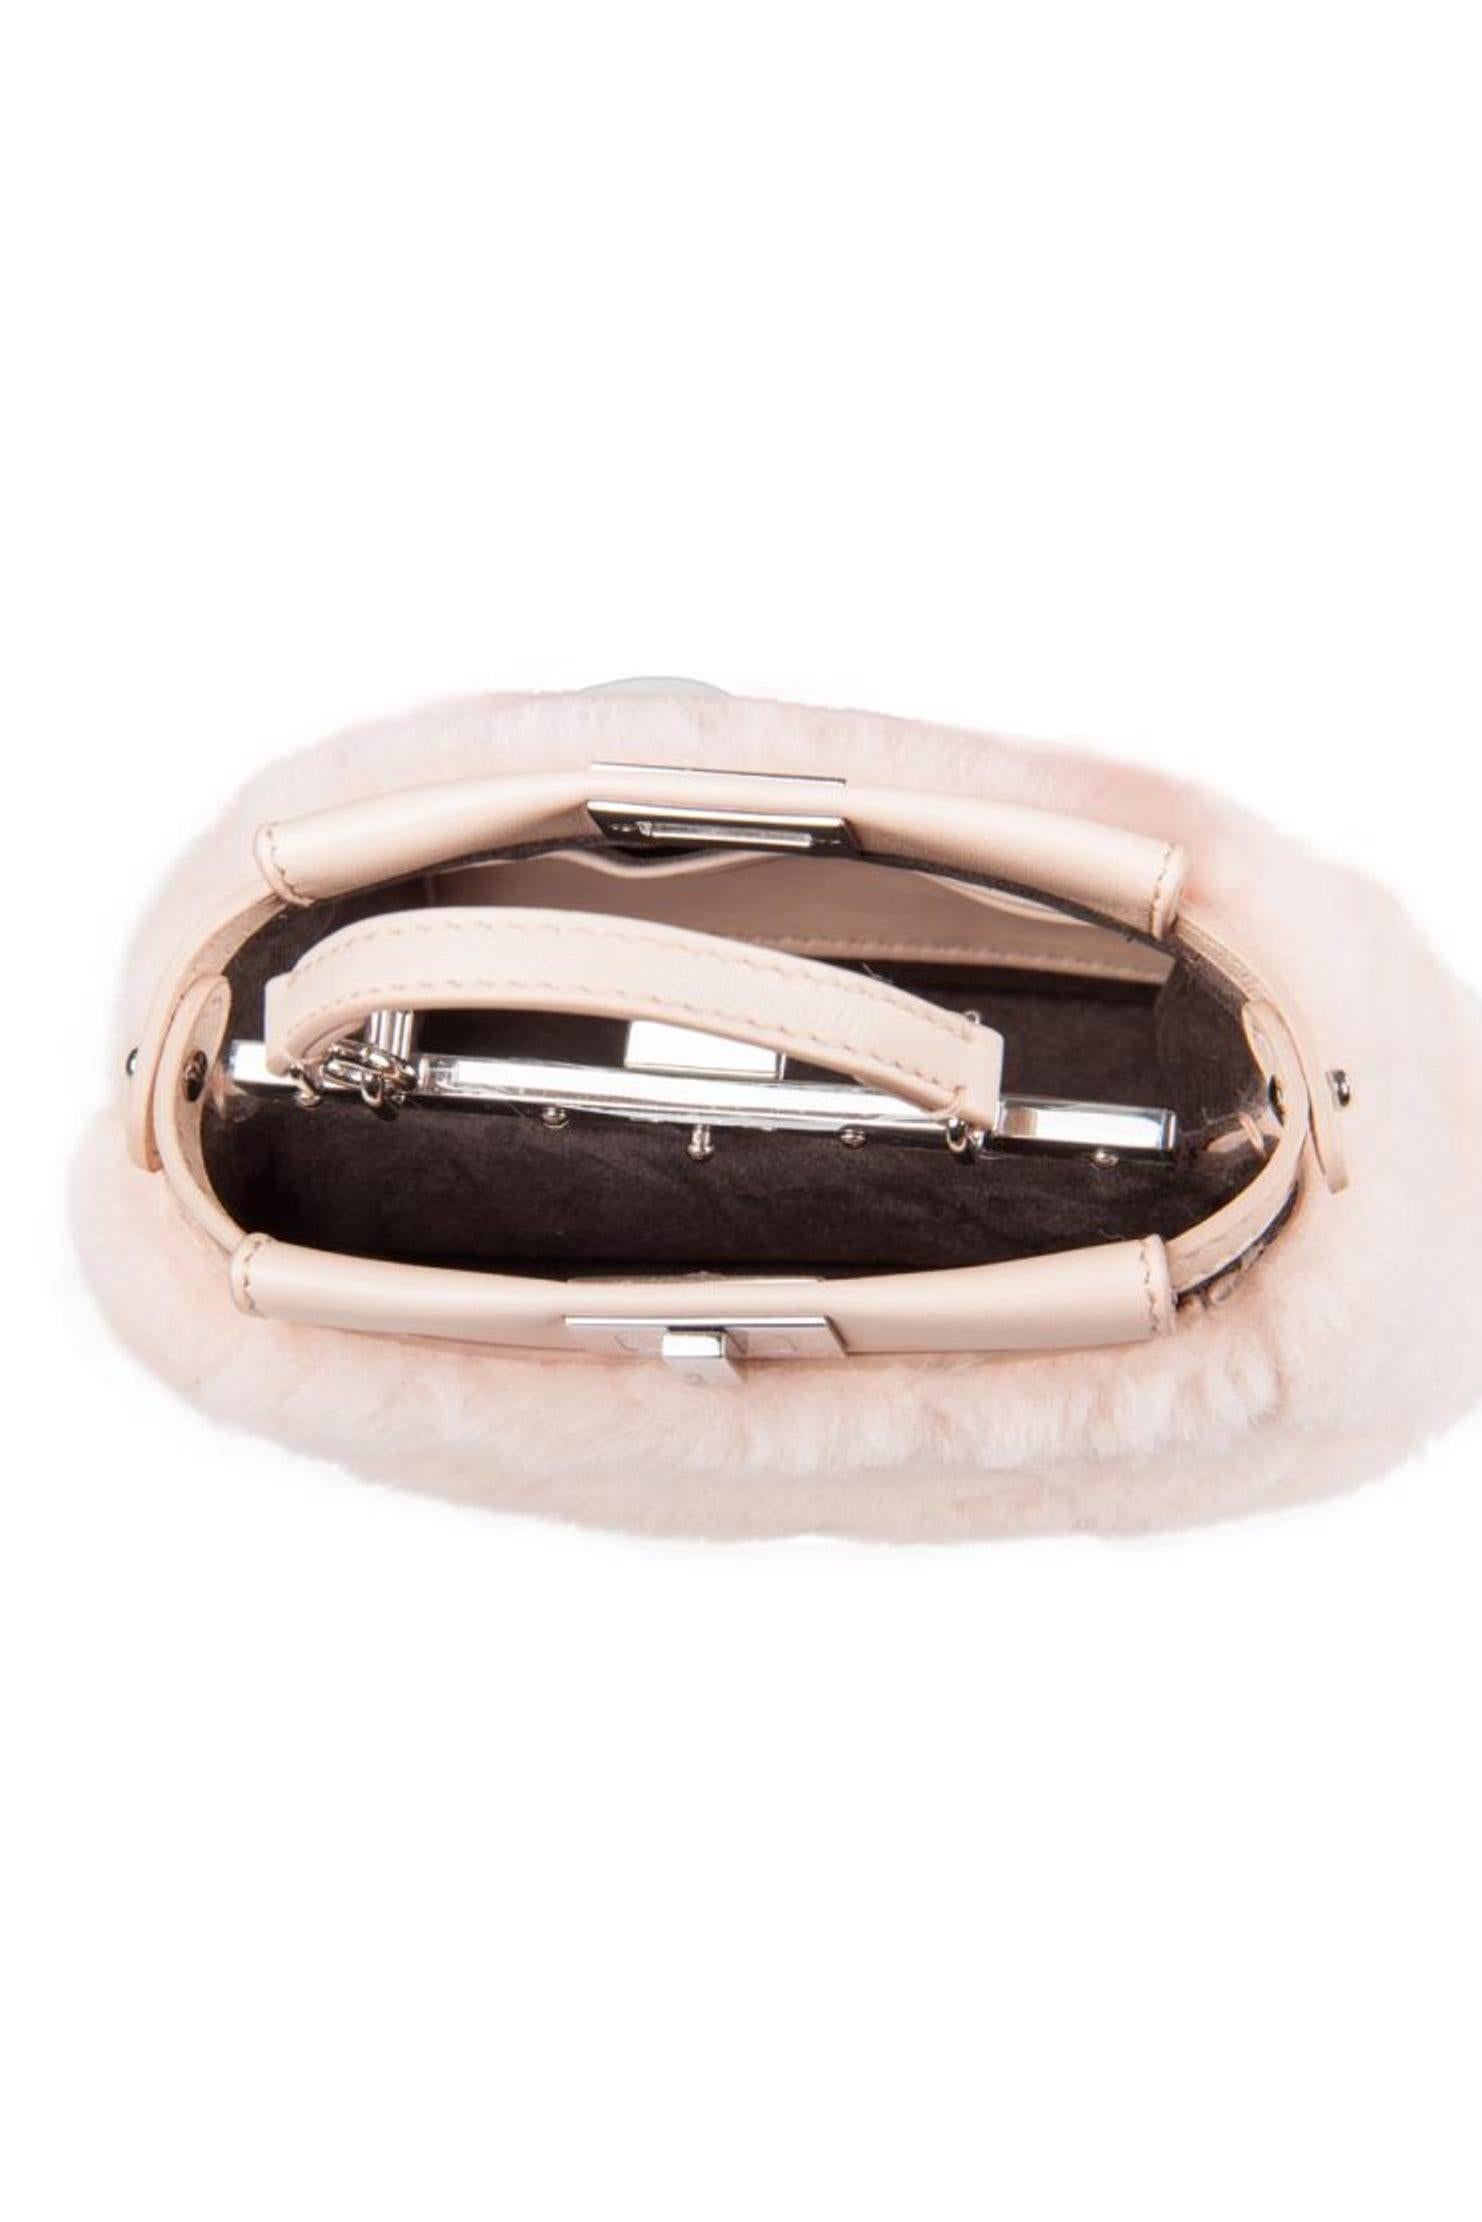 Fendi Peach Sherling Micro Peekaboo Crossbody Bag In New Condition In Dubai, Al Qouz 2